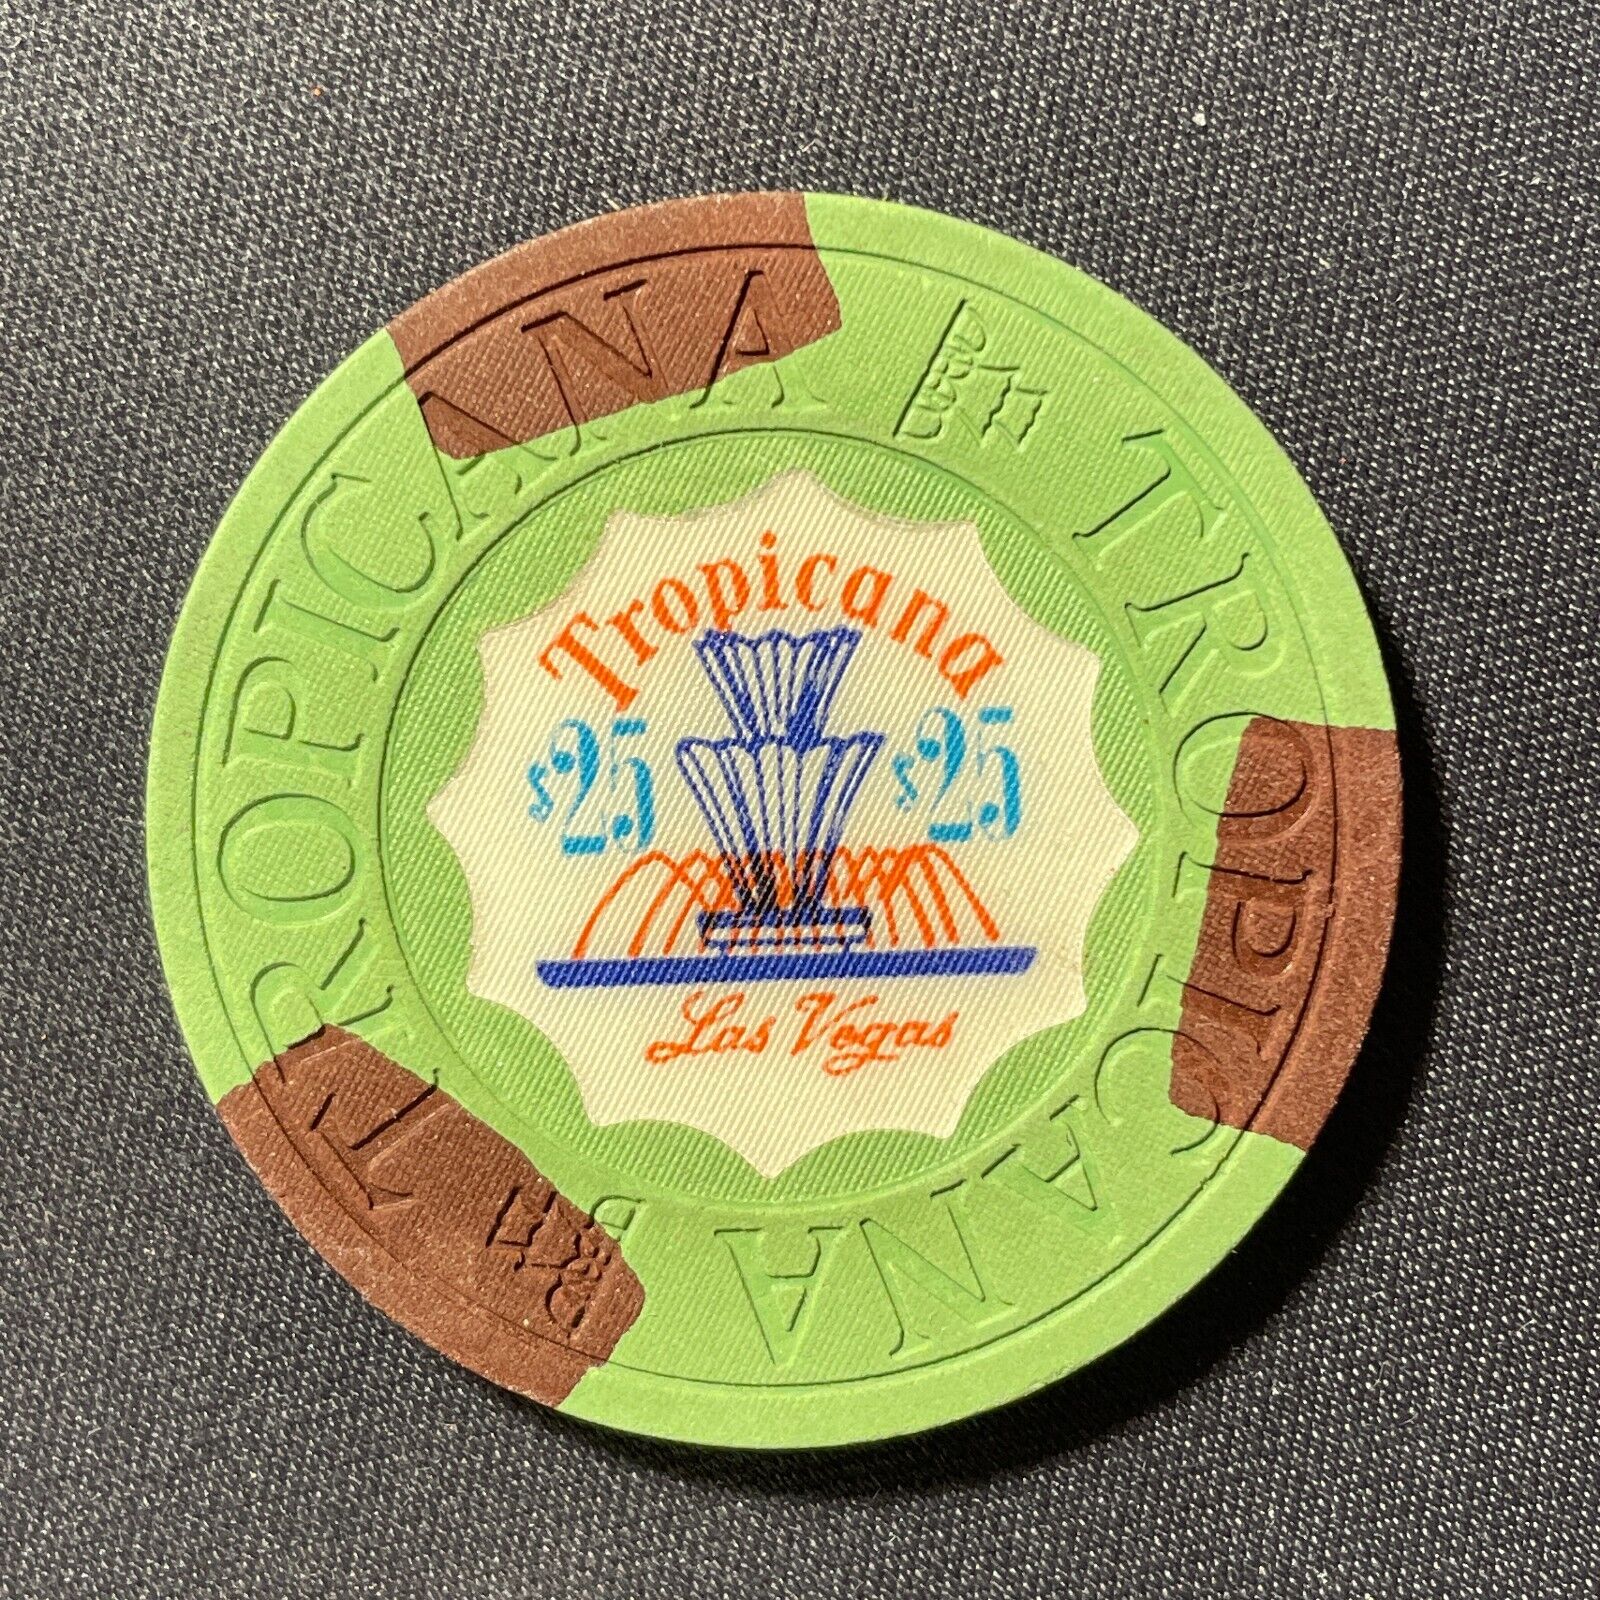 Tropicana Las Vegas $25 casino chip house chip 1972 obsolete poker LV25